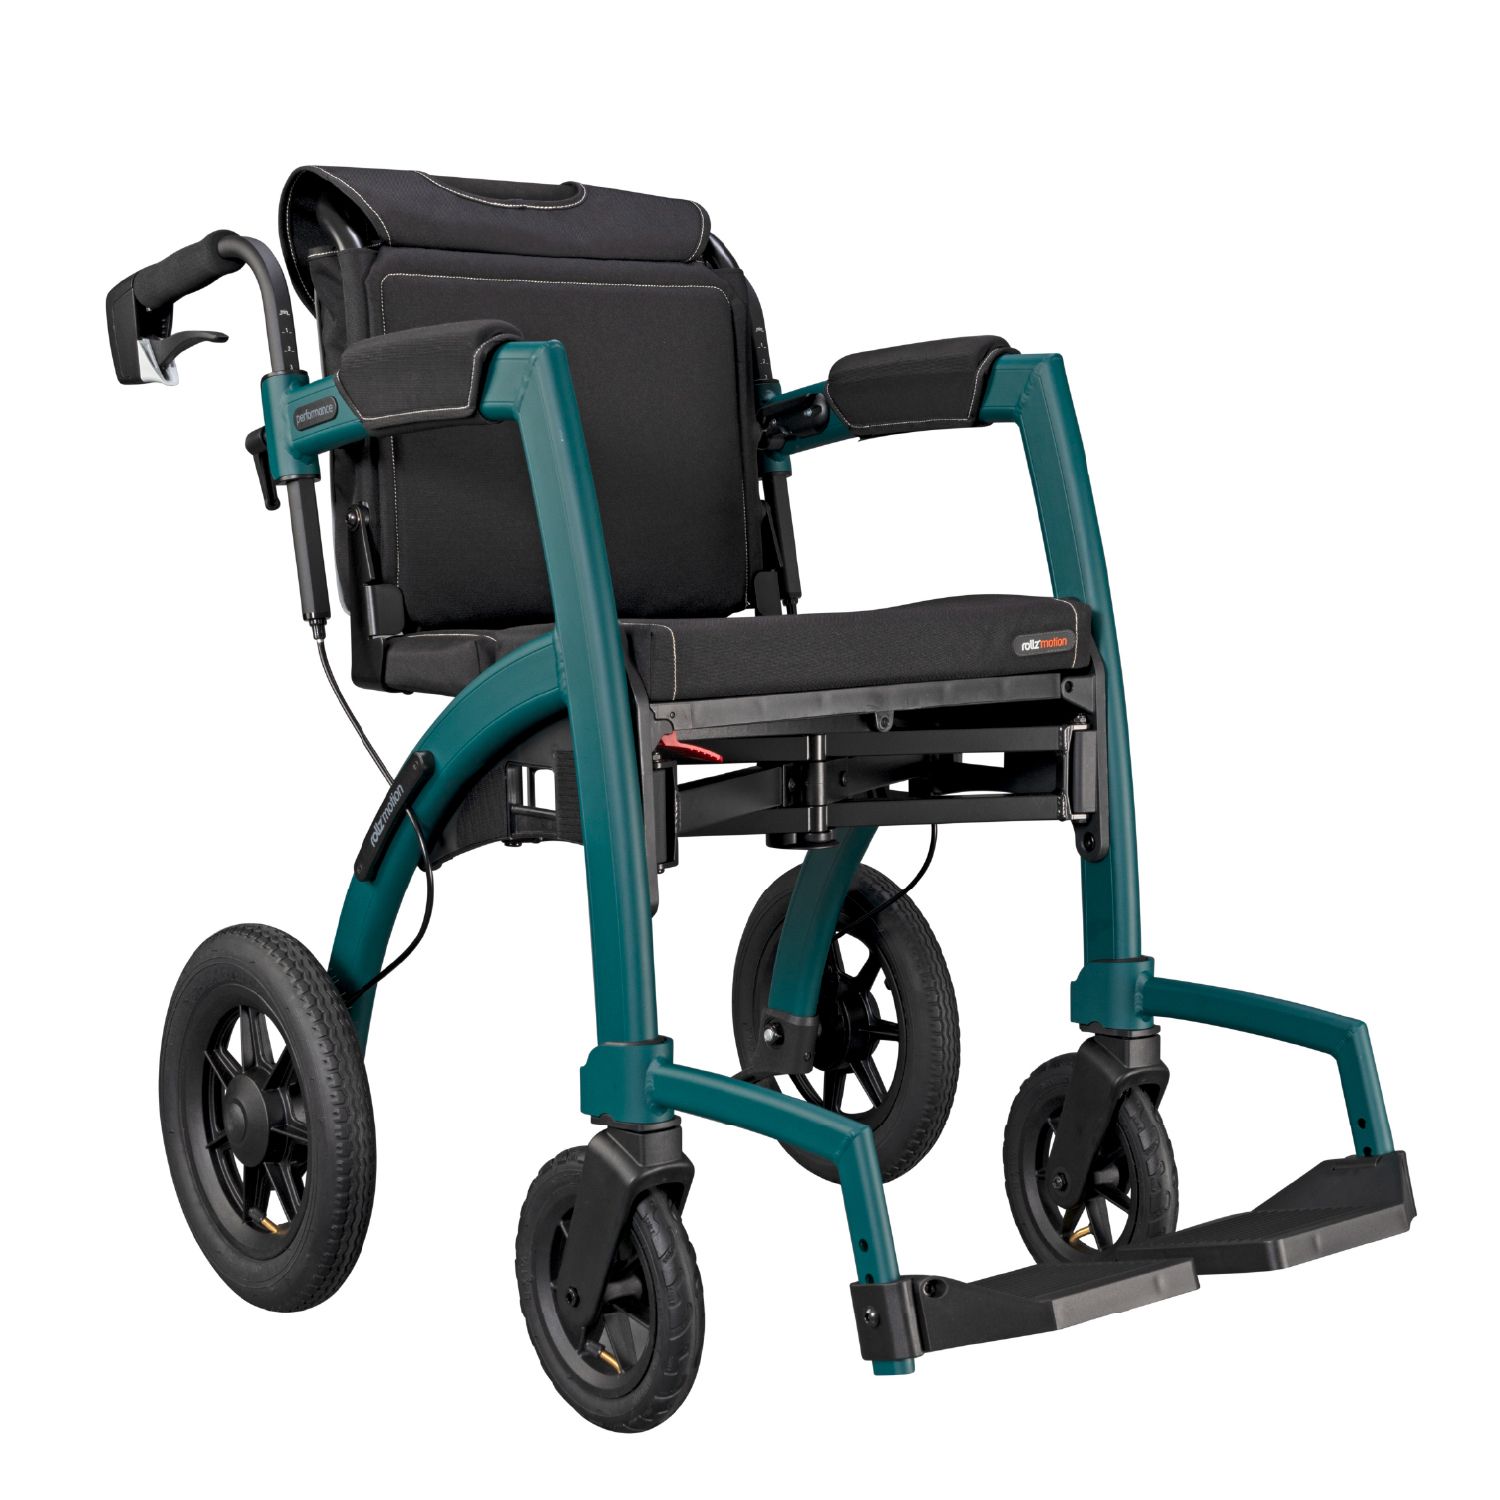 stad Leidinggevende Acht De Rollz Motion Performance rollator-rolstoel kopen - Medicura